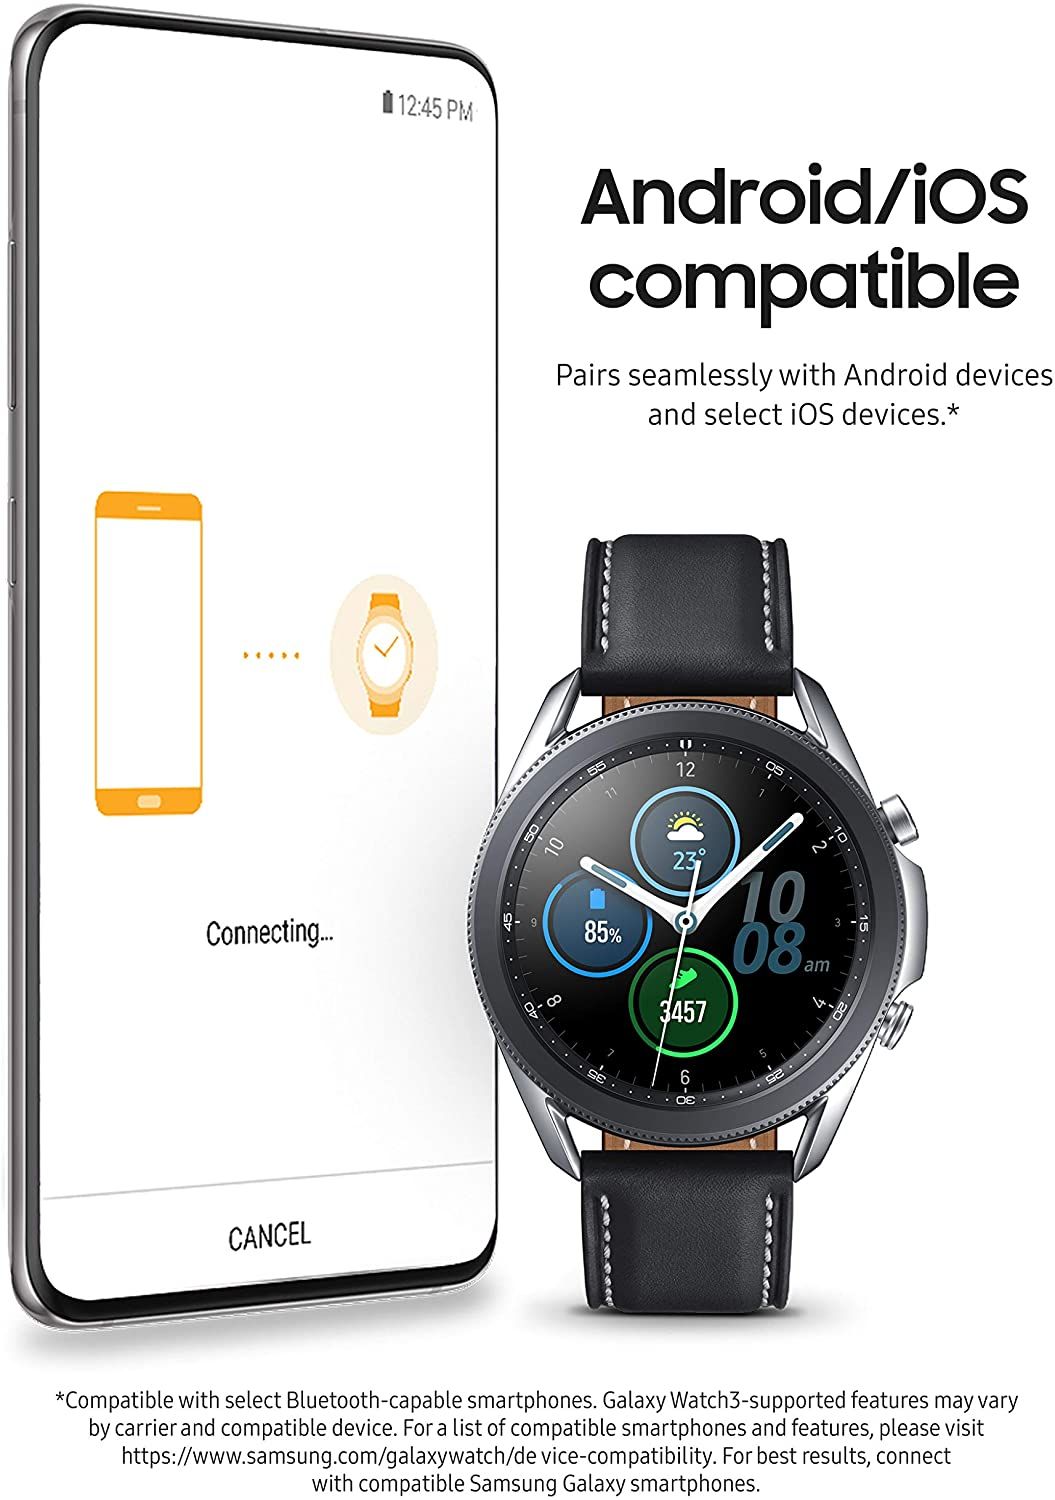 Samsung Galaxy Watch 3 features